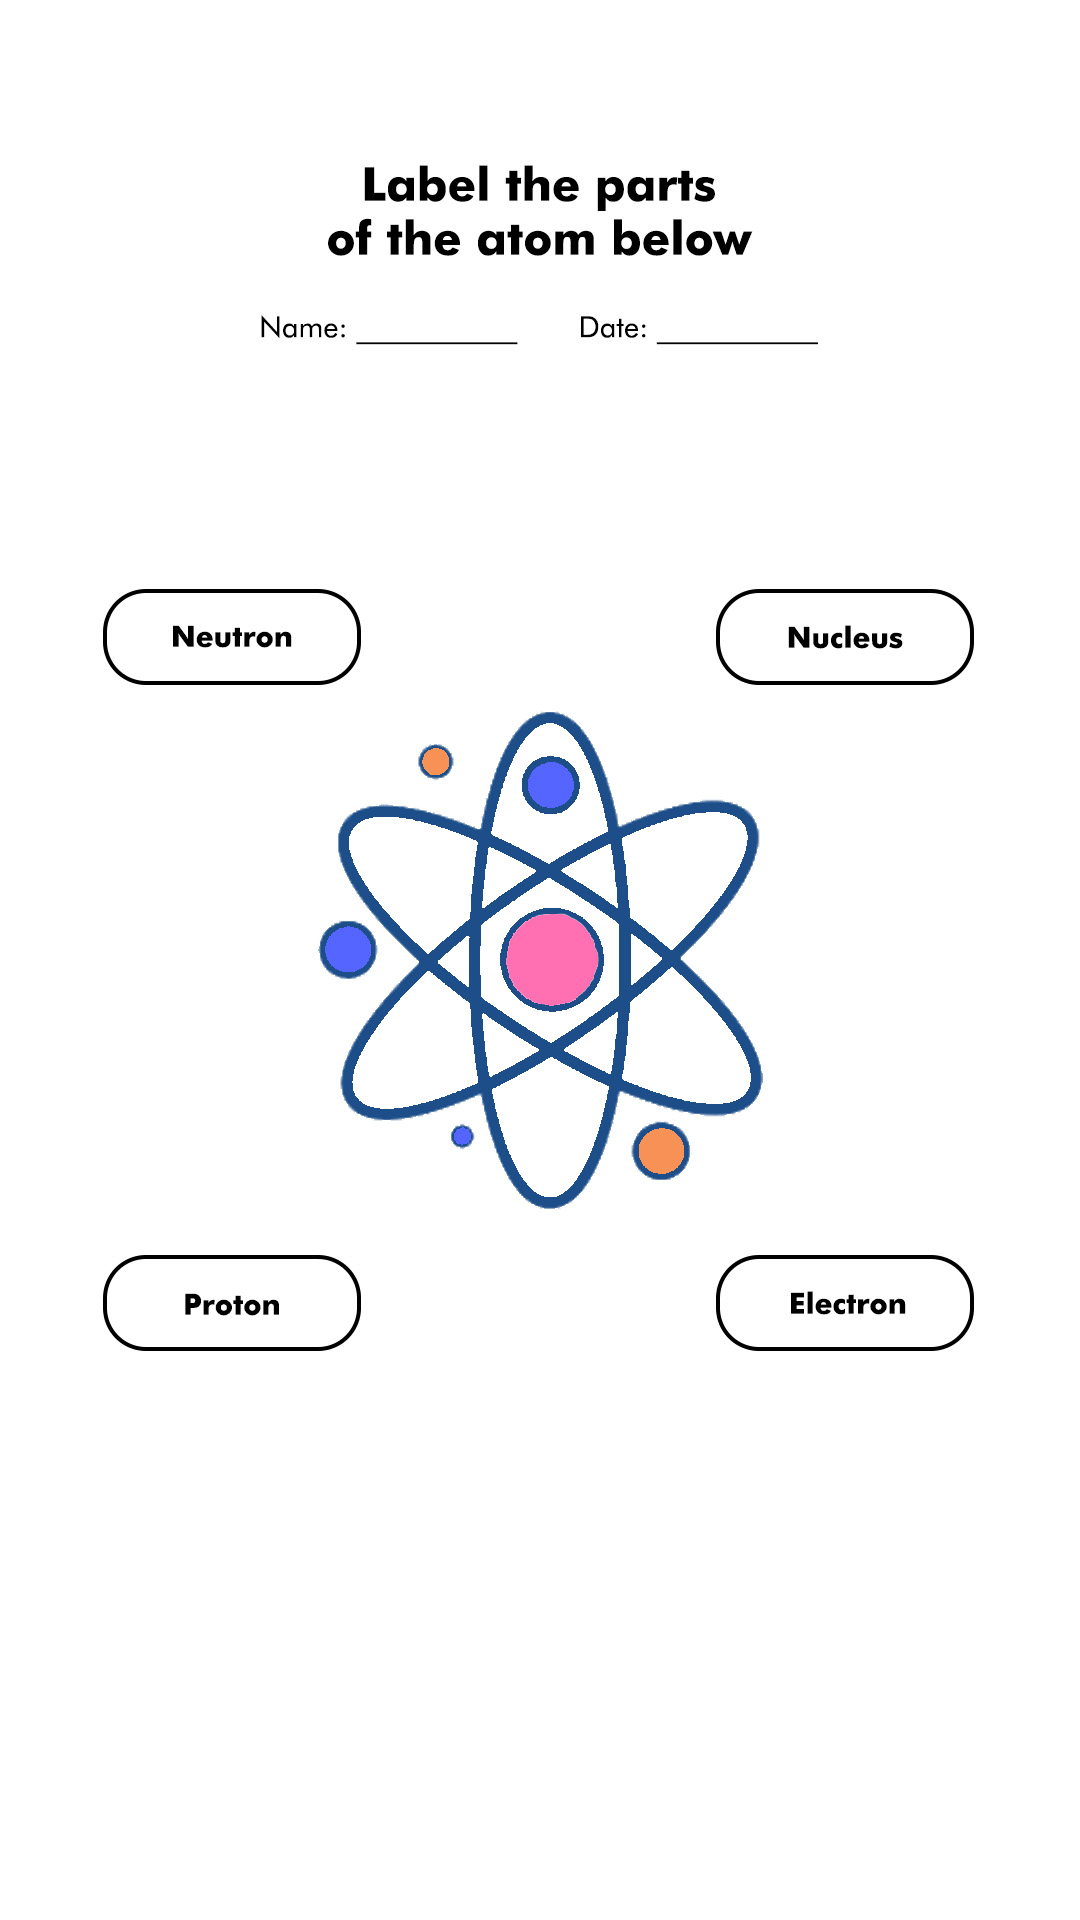 Label Parts of an Atom Diagram Image